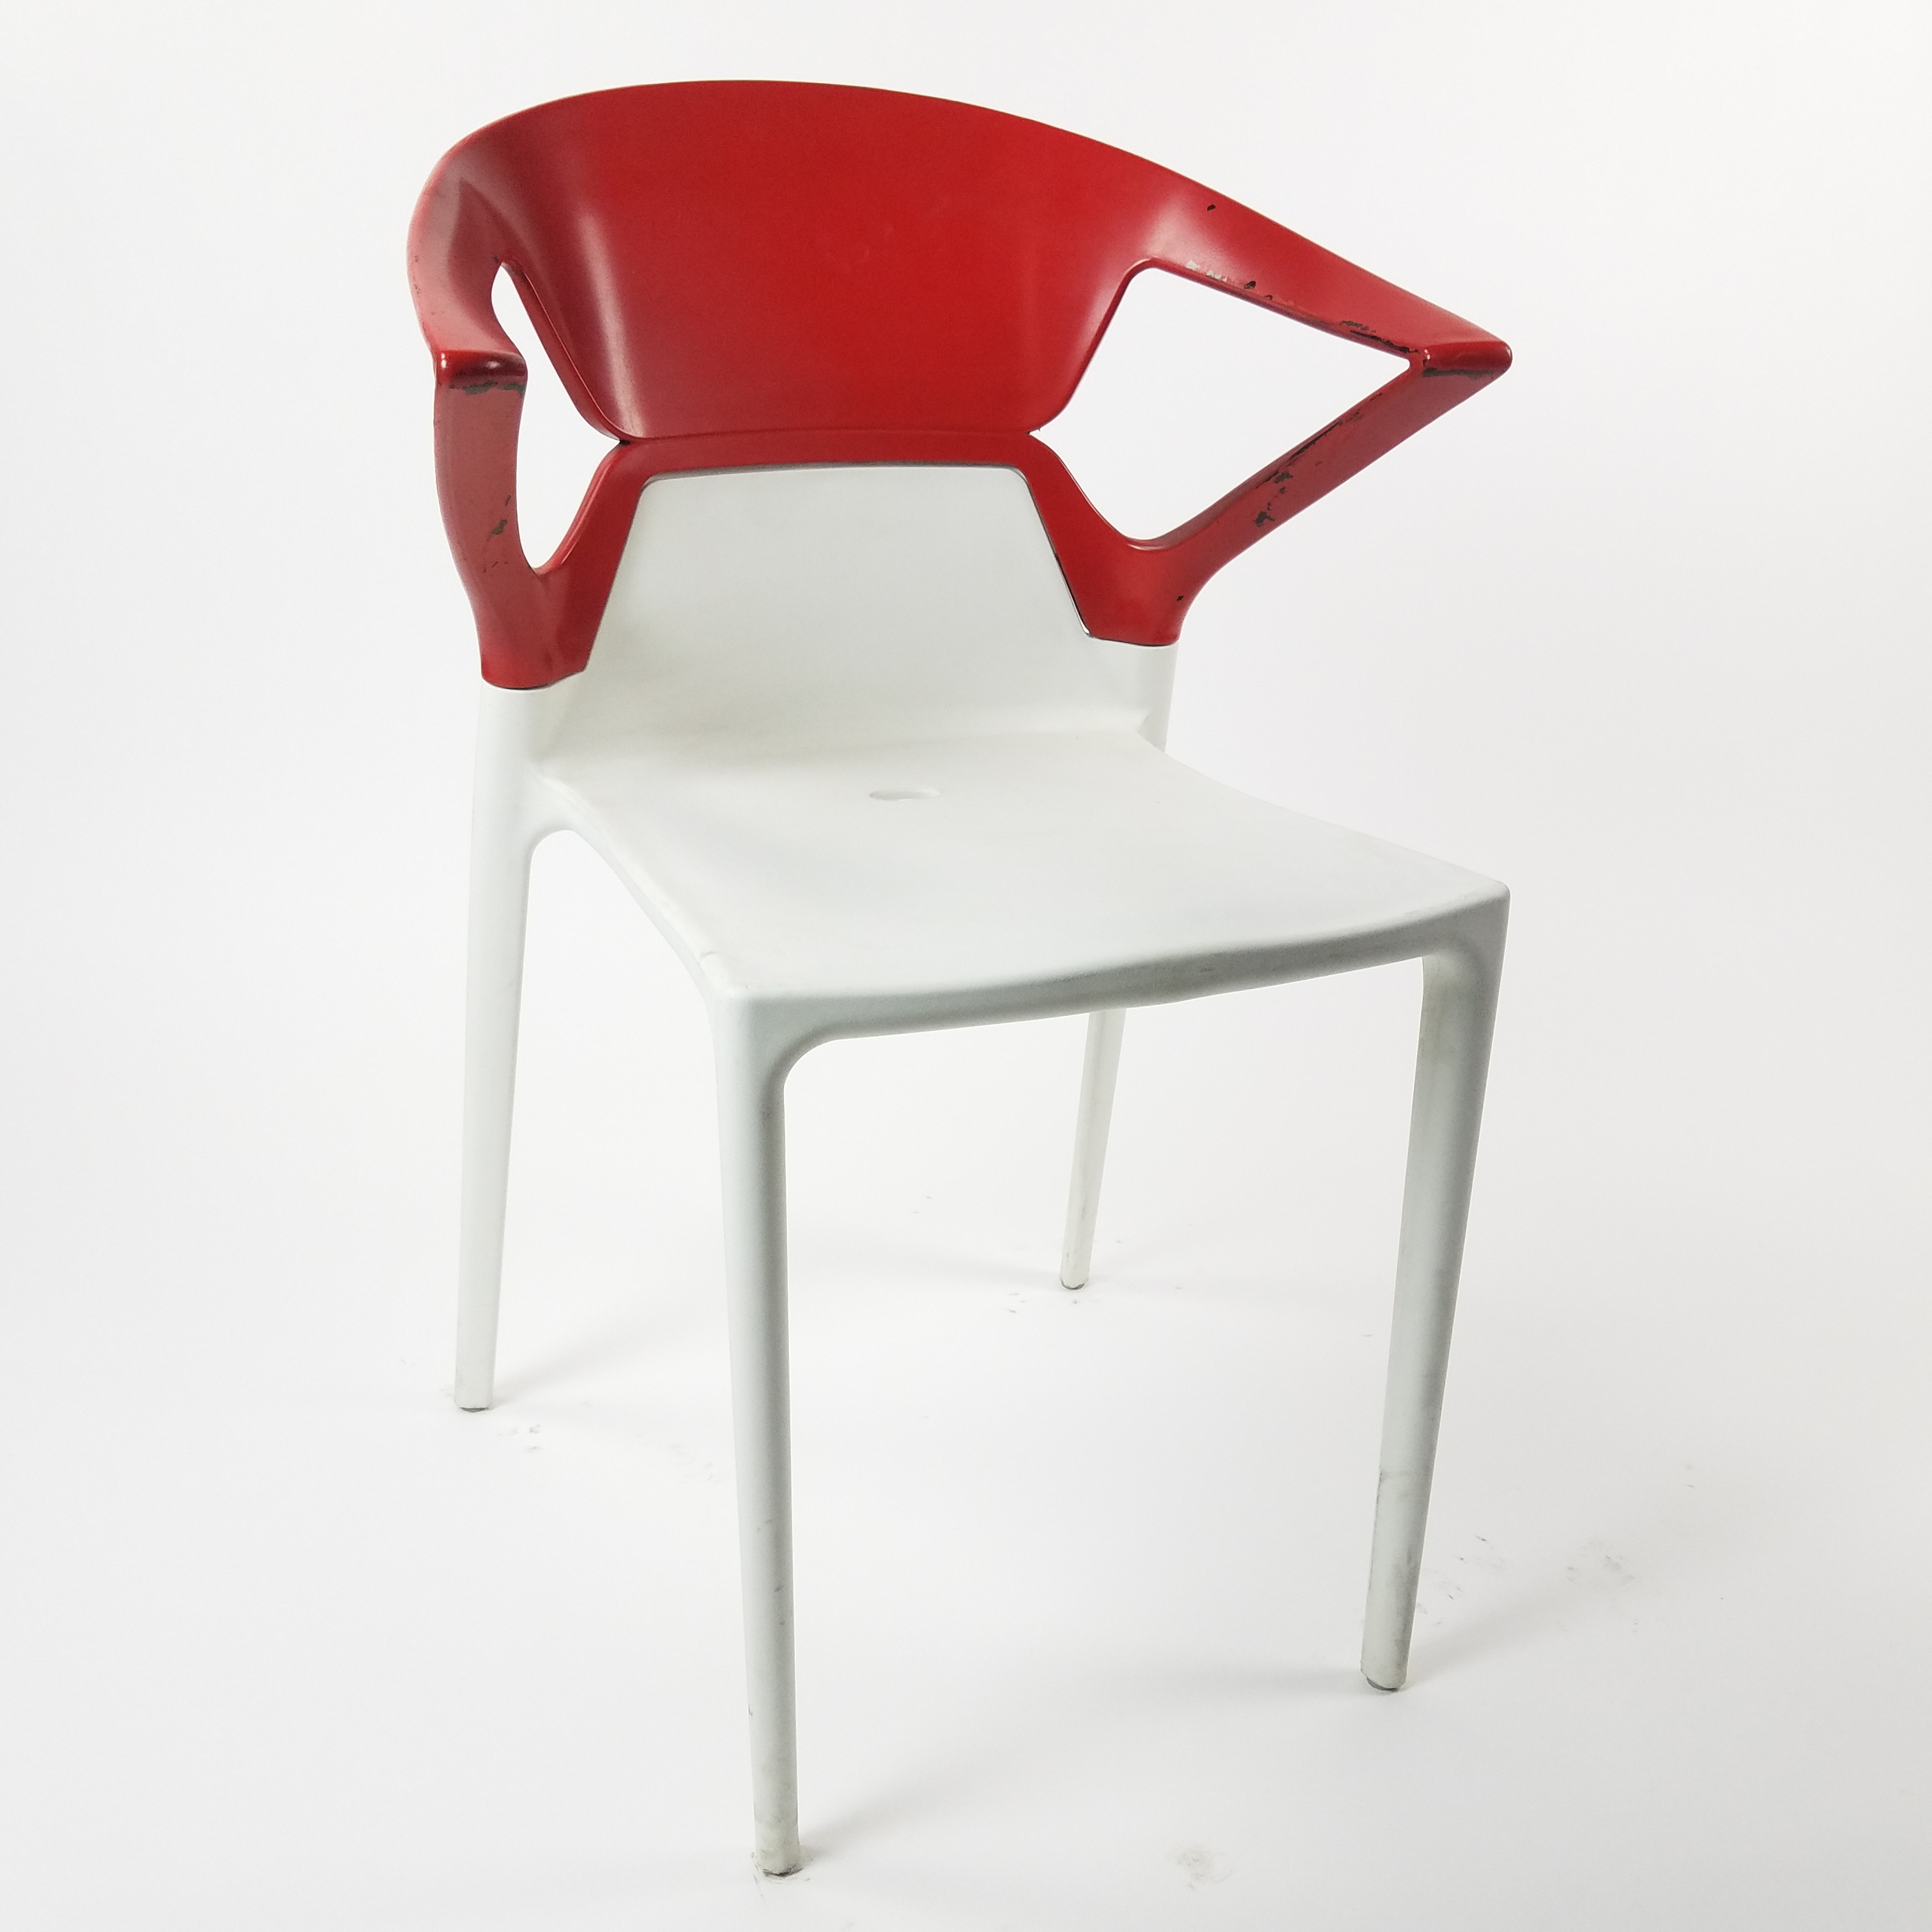 CHAIR / ITALIA / RED & WHITE PLASTIC Air Designs